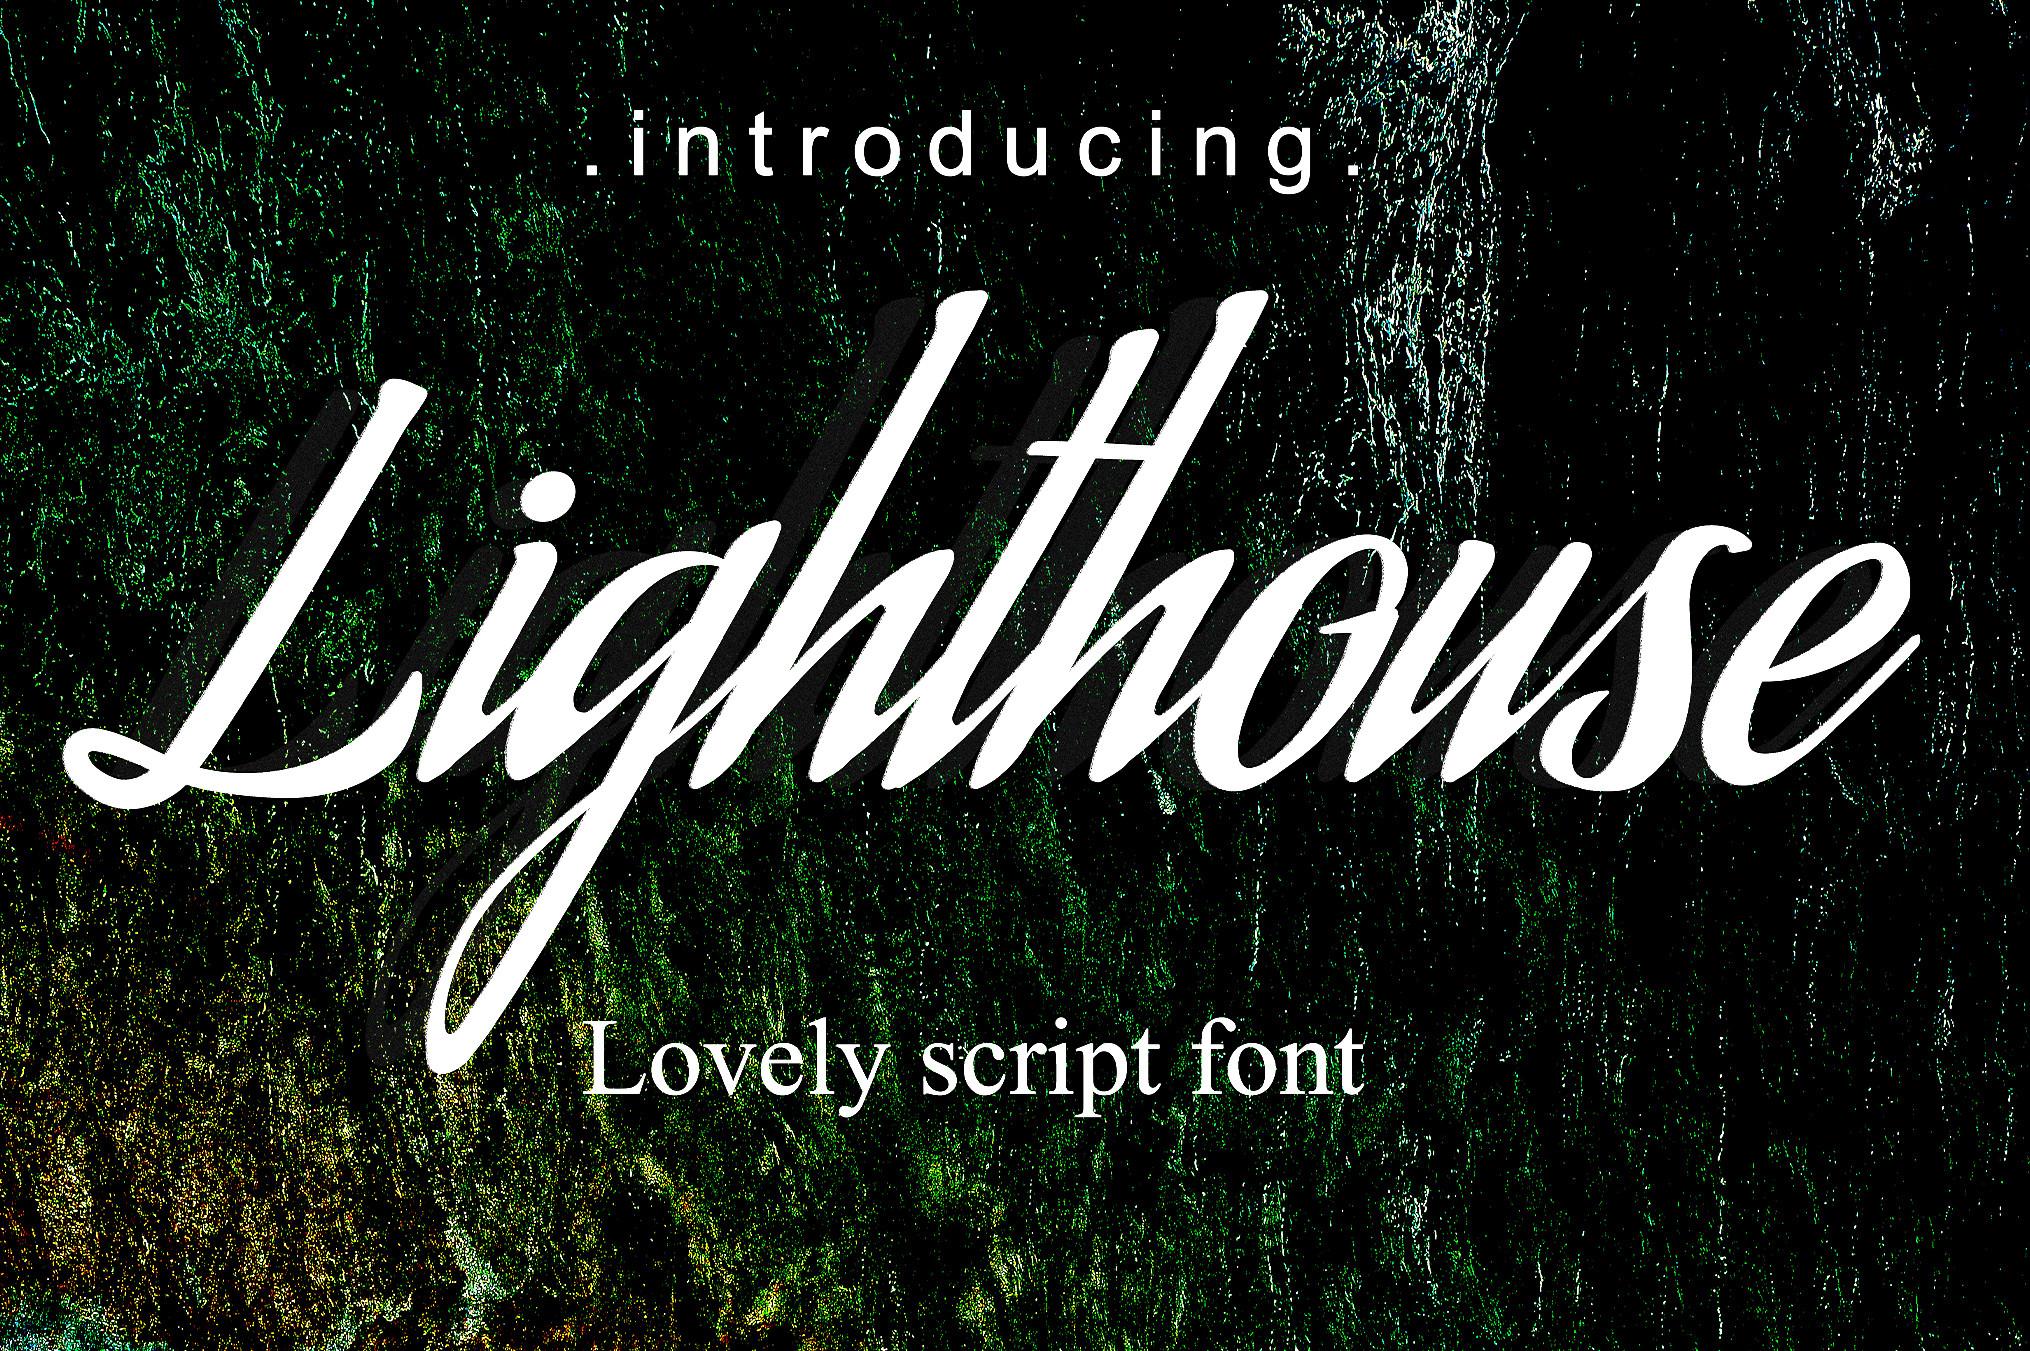 Lighthouse Font